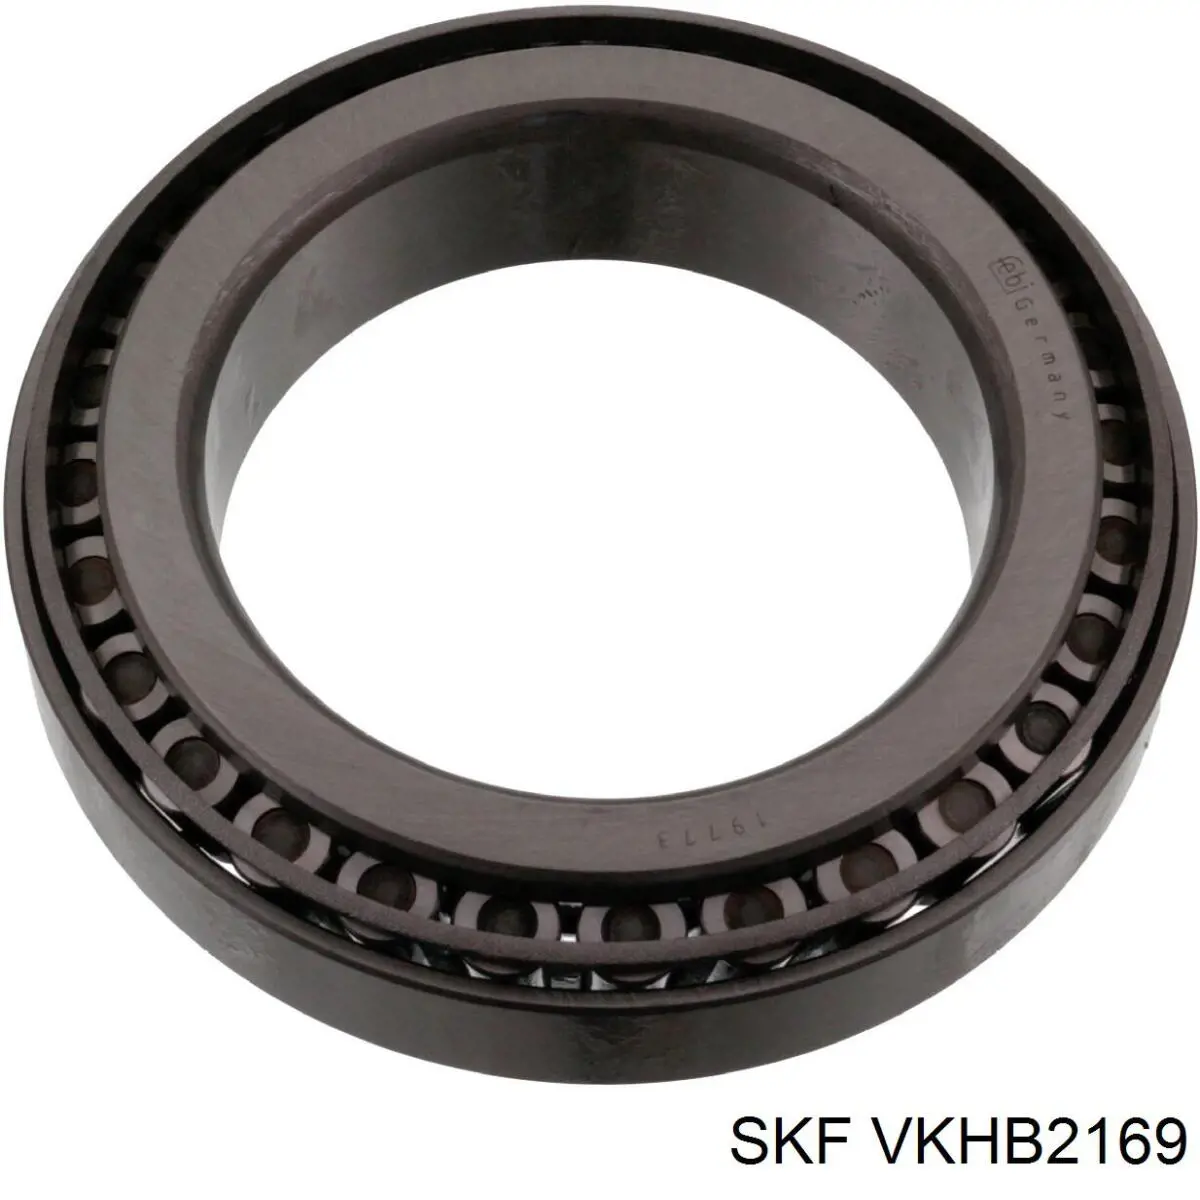 VKHB2169 SKF cojinete de rueda delantero/trasero